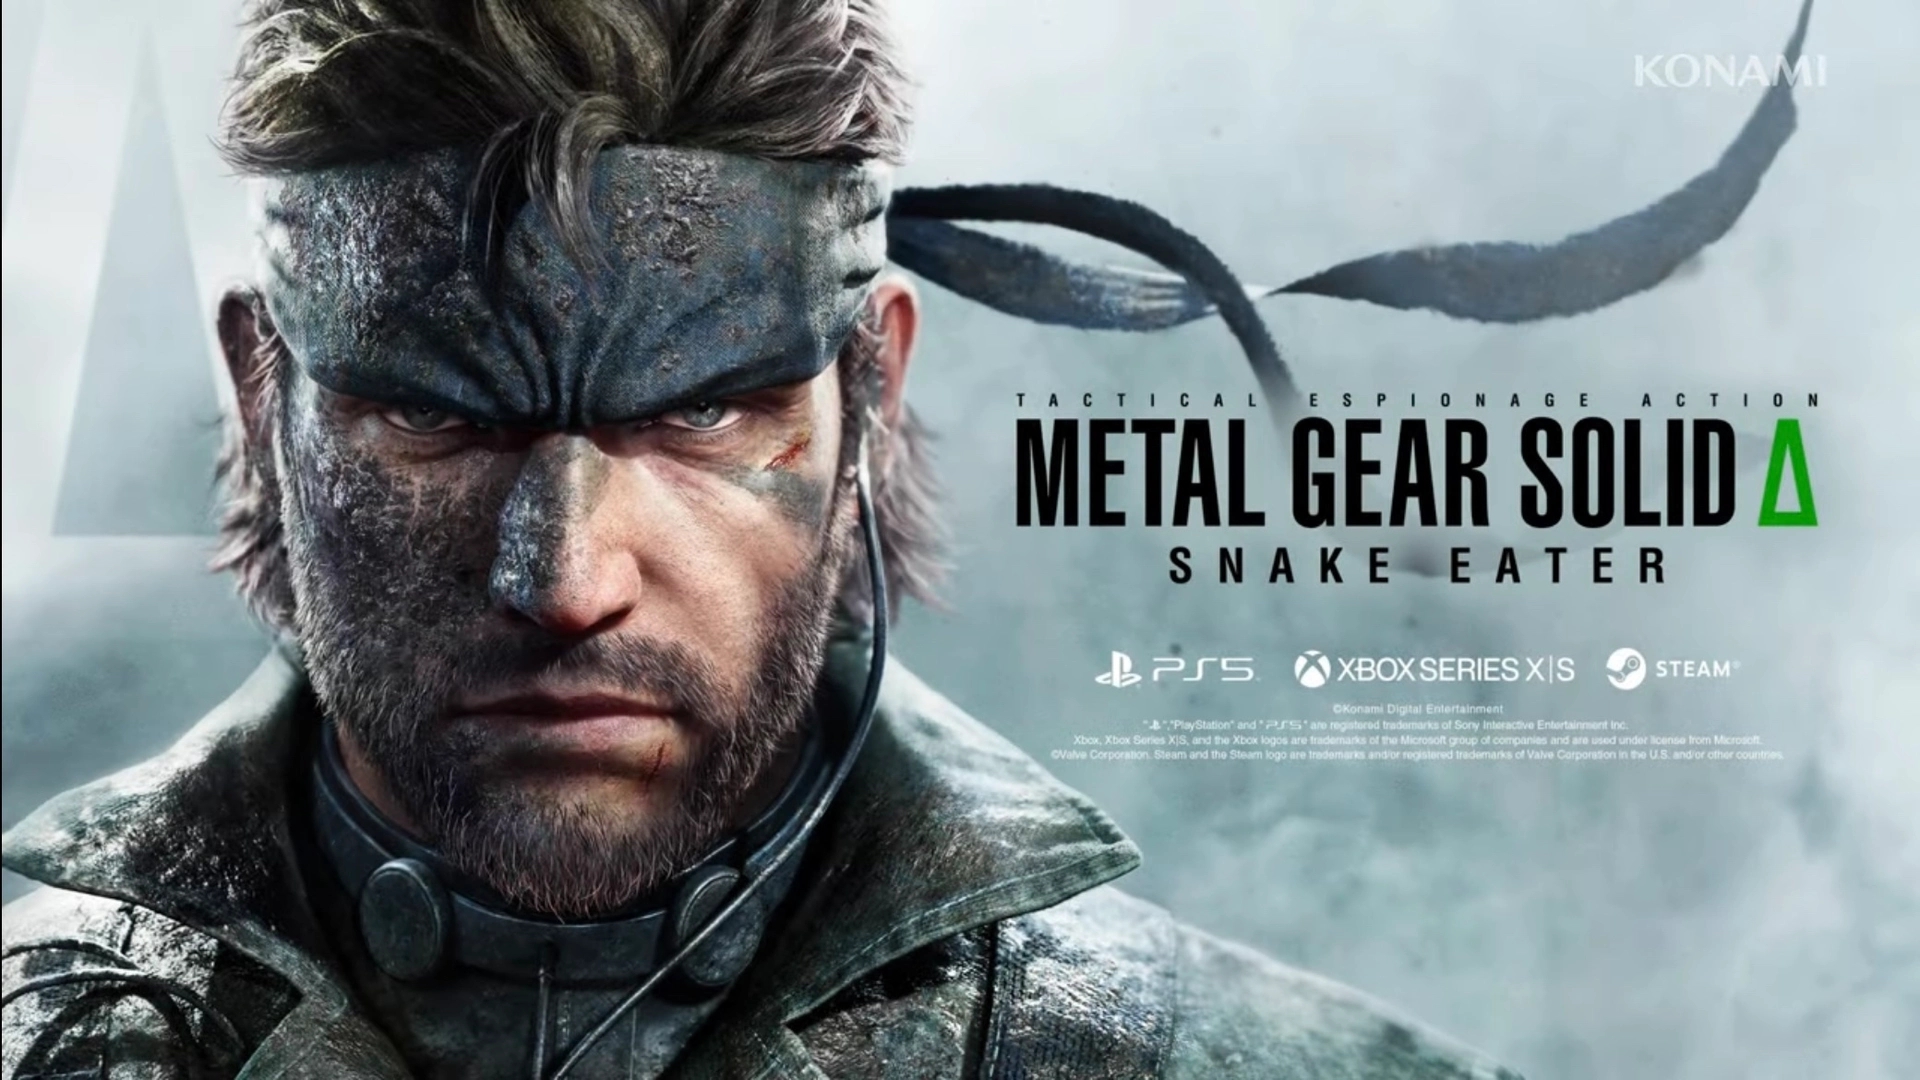 Metal Gear Solid Delta: Snake Eater remake revealed in Unreal